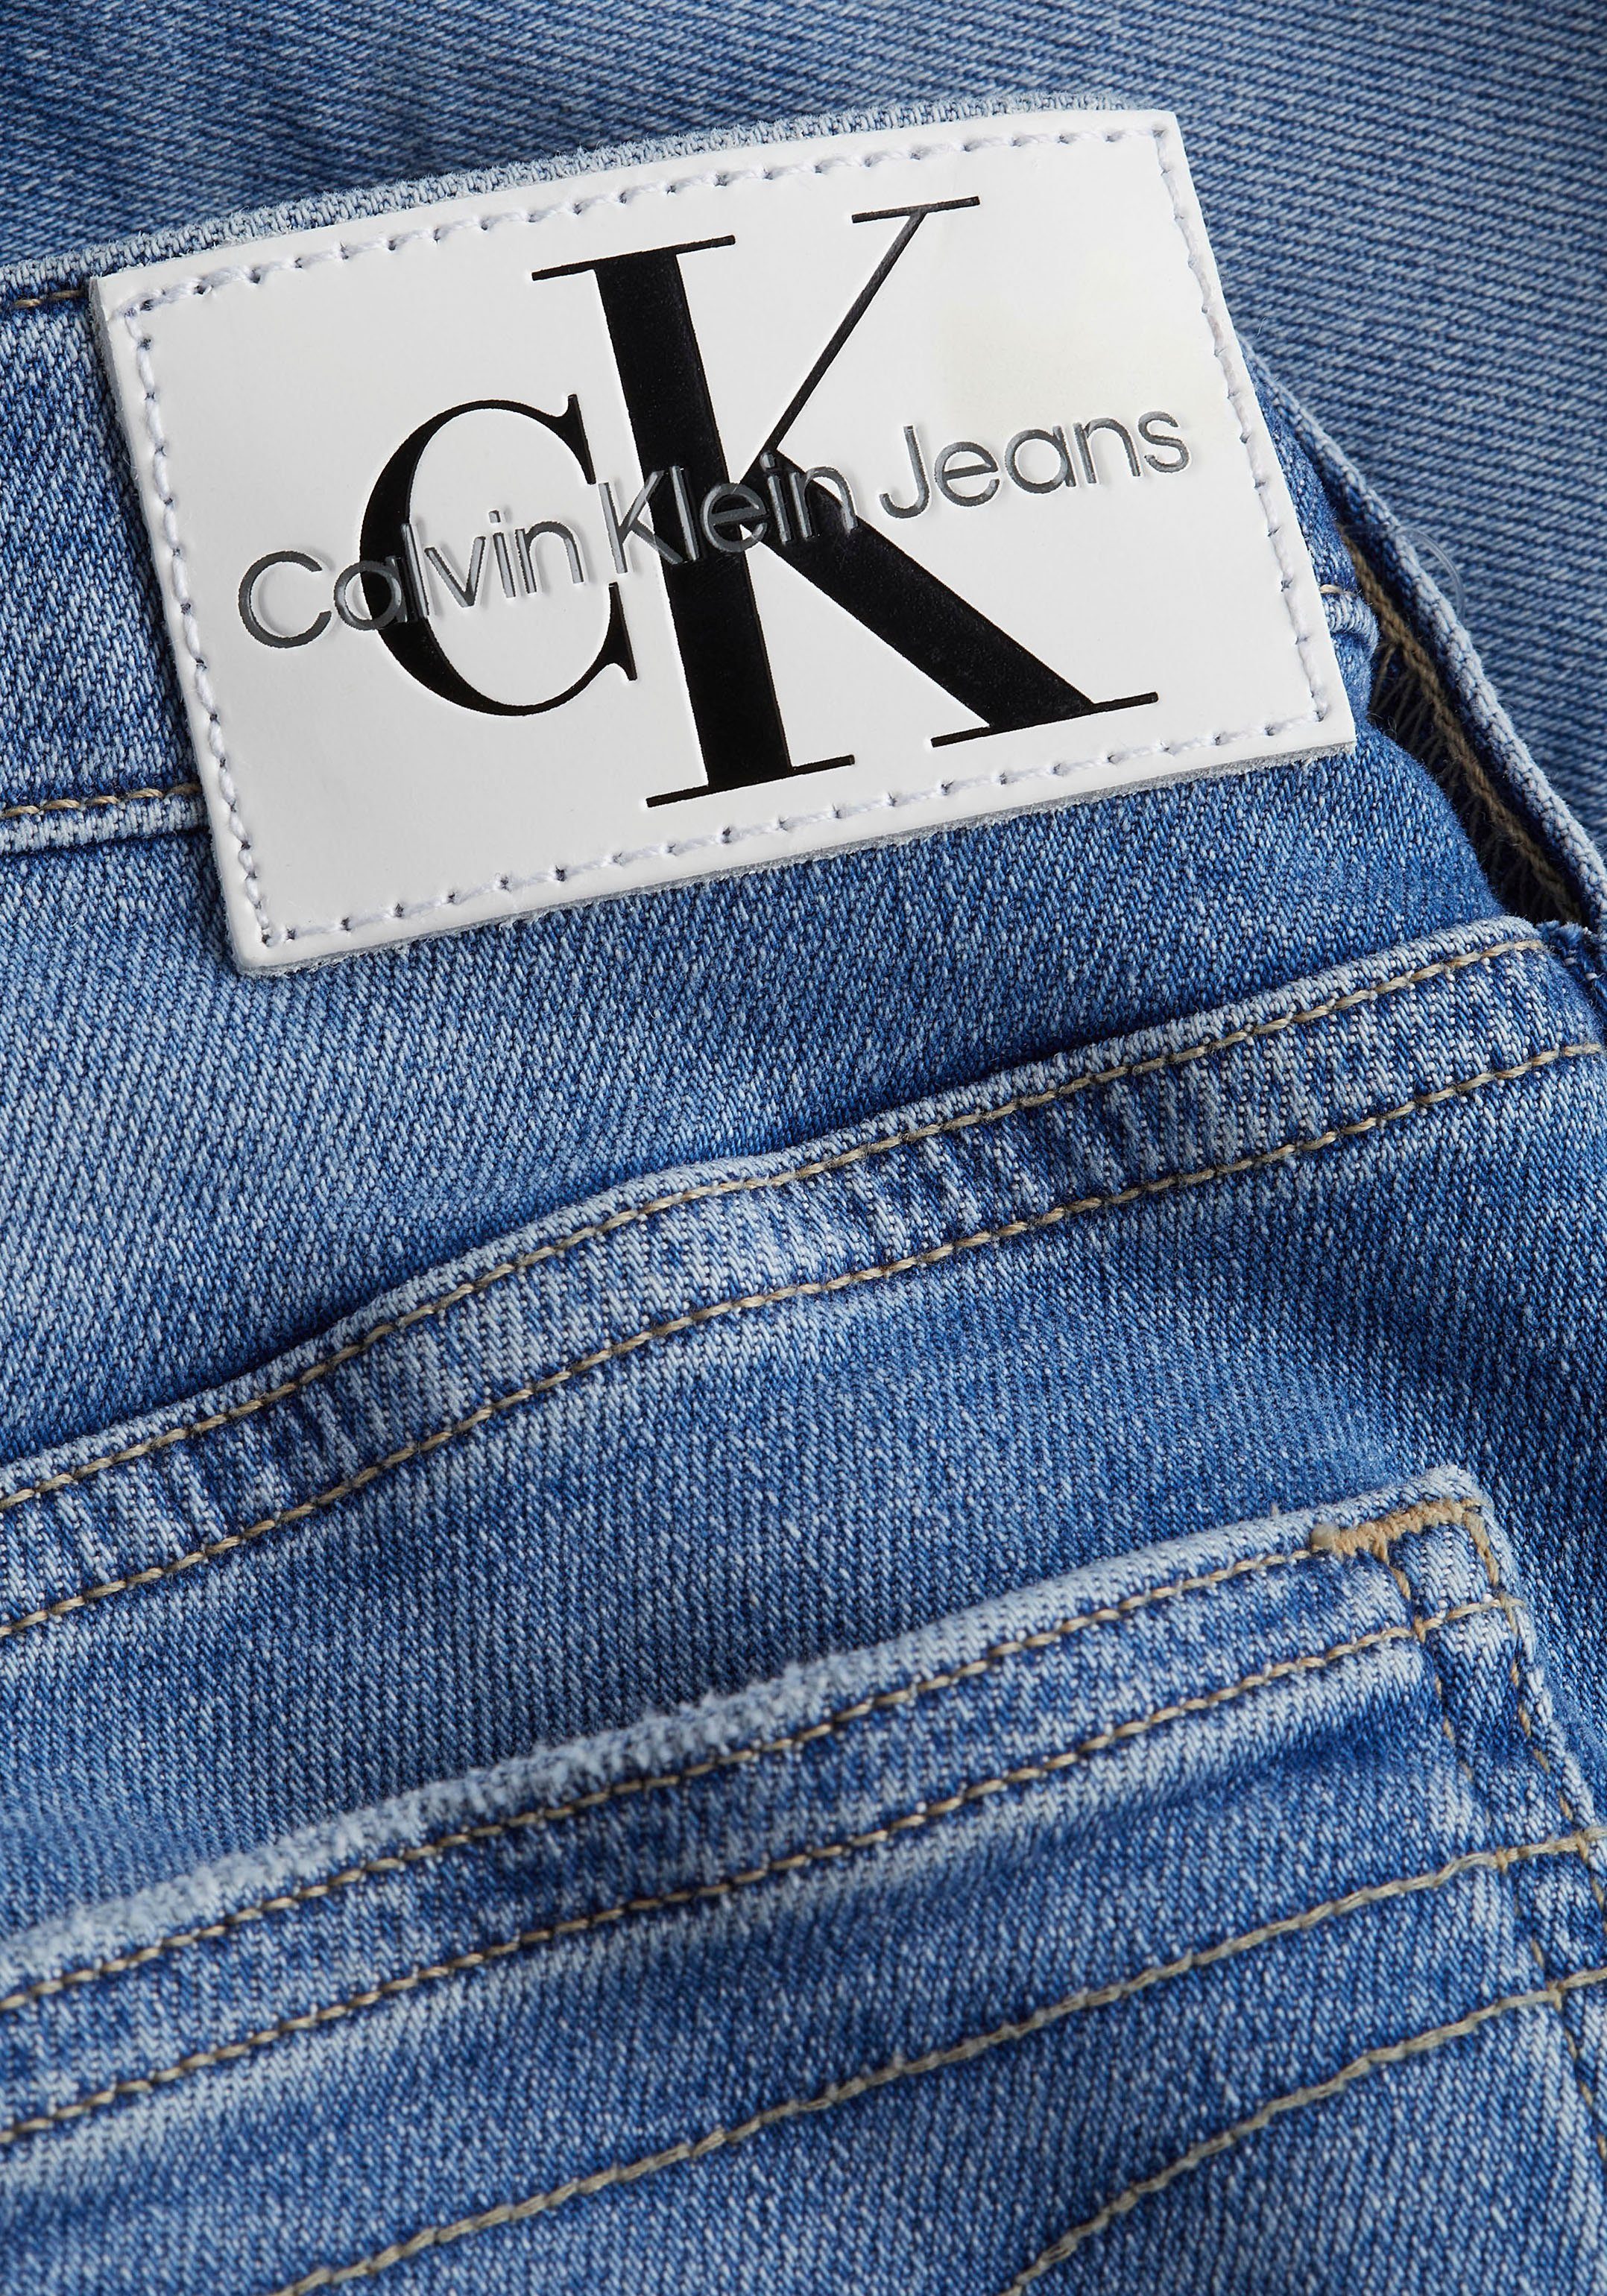 Damen Hosen Calvin Klein Jeans Shorts MID RISE SHORT mit CK Jeans Badge